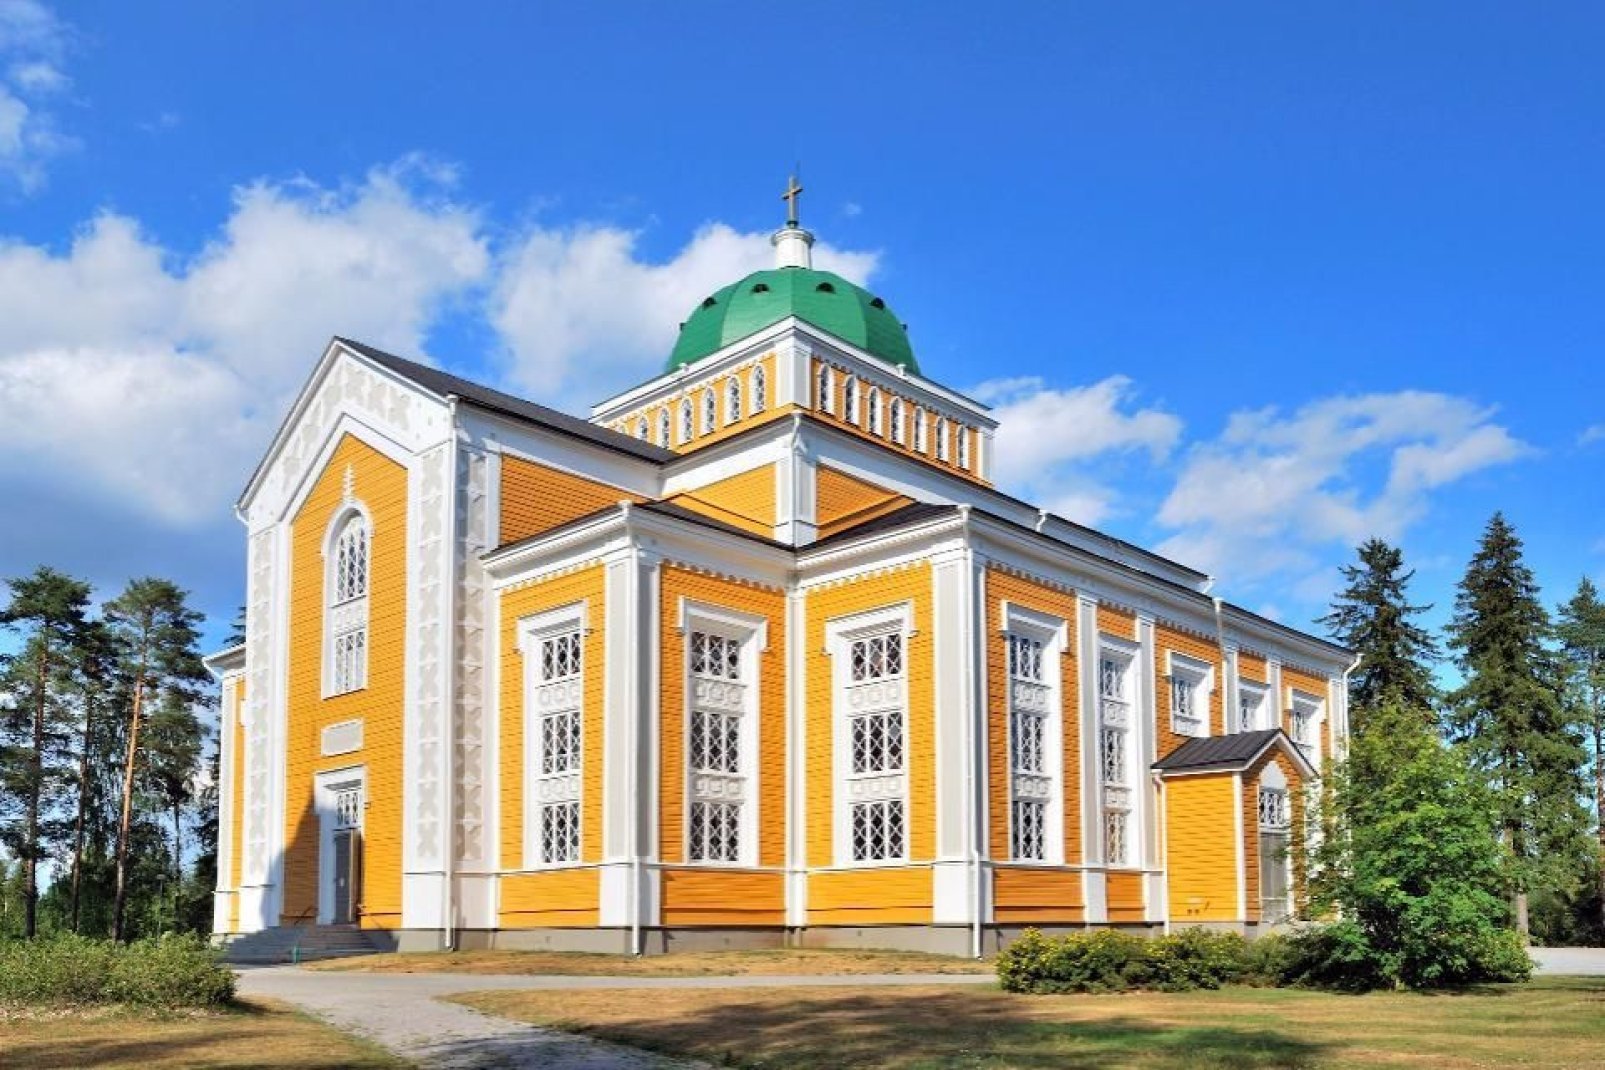 La ville de Kerimäki abrite la plus grande église en bois au Monde.